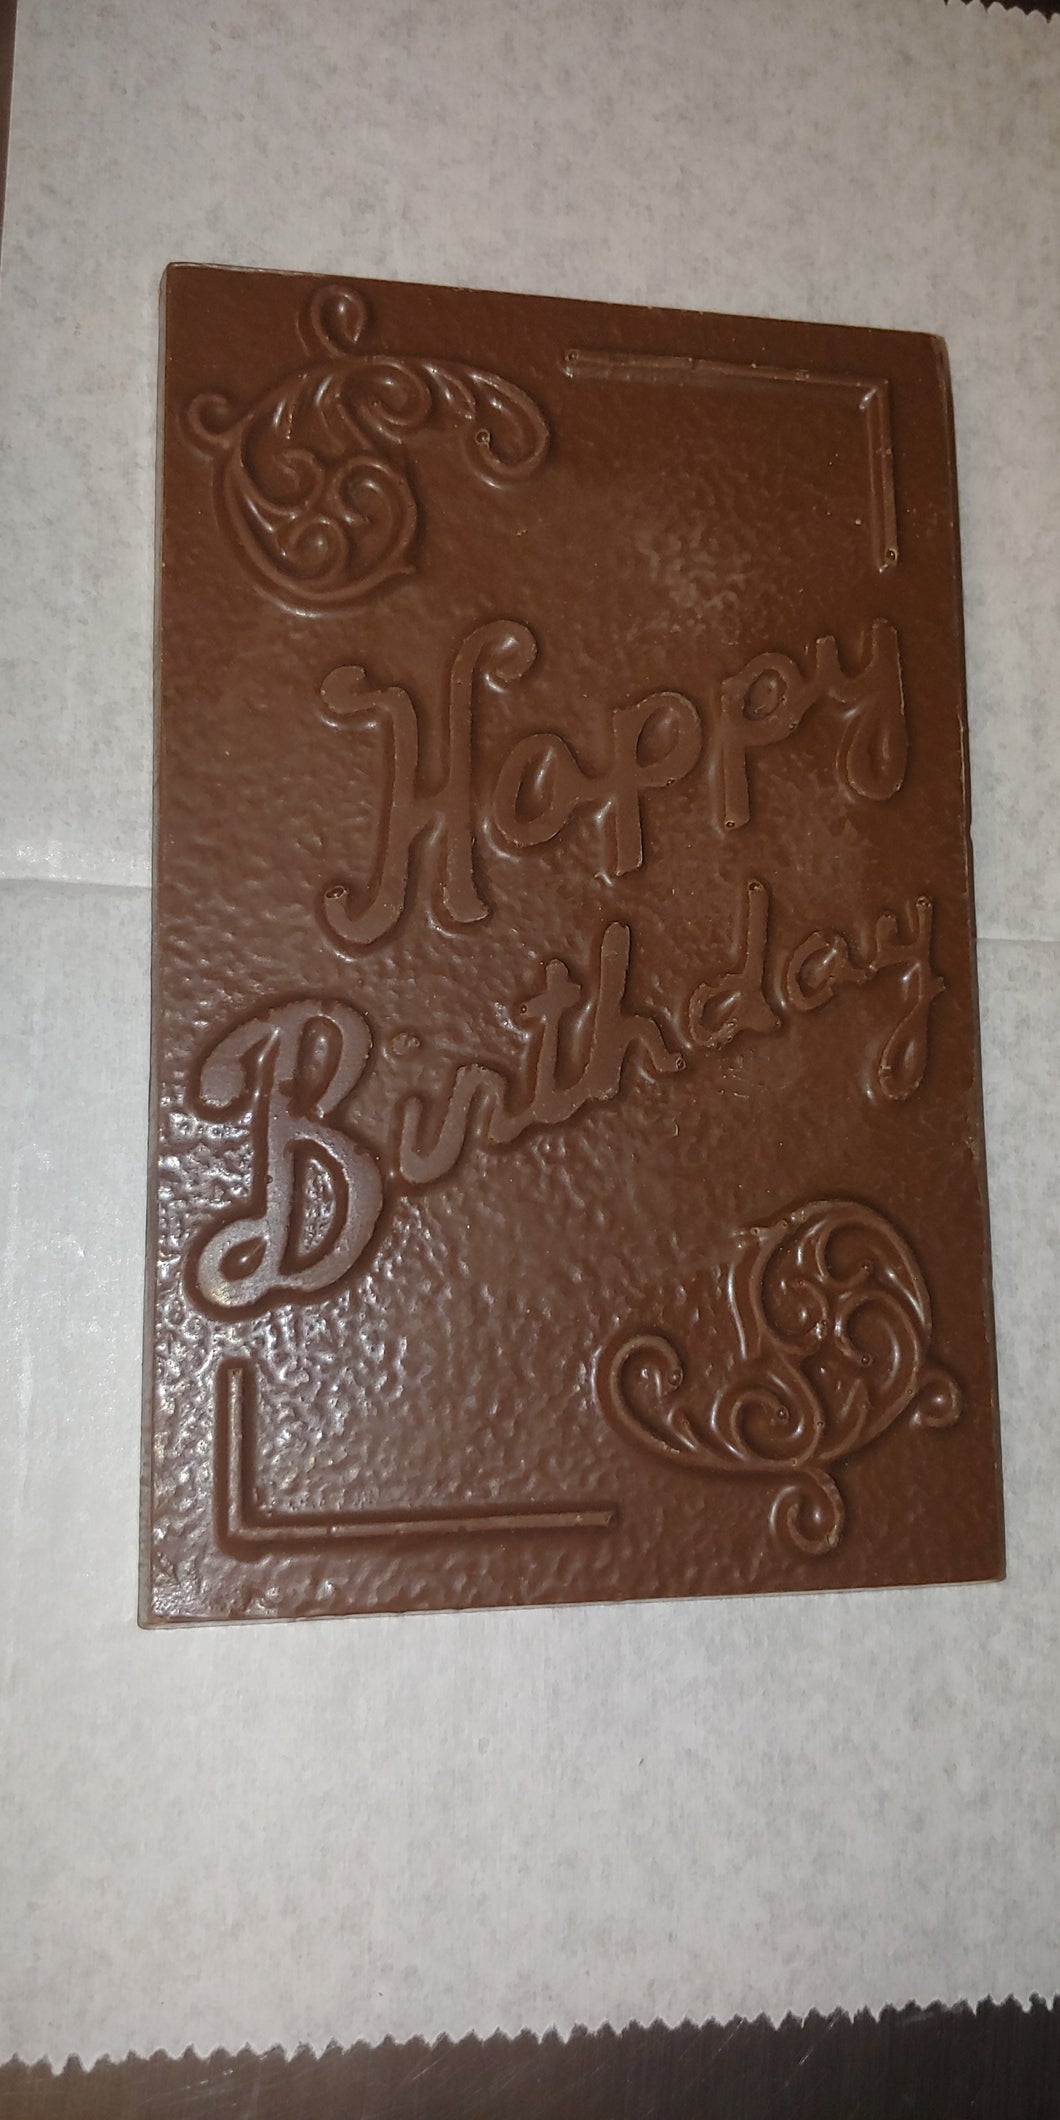 Happy Birthday & Happy Anniversary Chocolate Bars with gift box. - Peterson's Candies